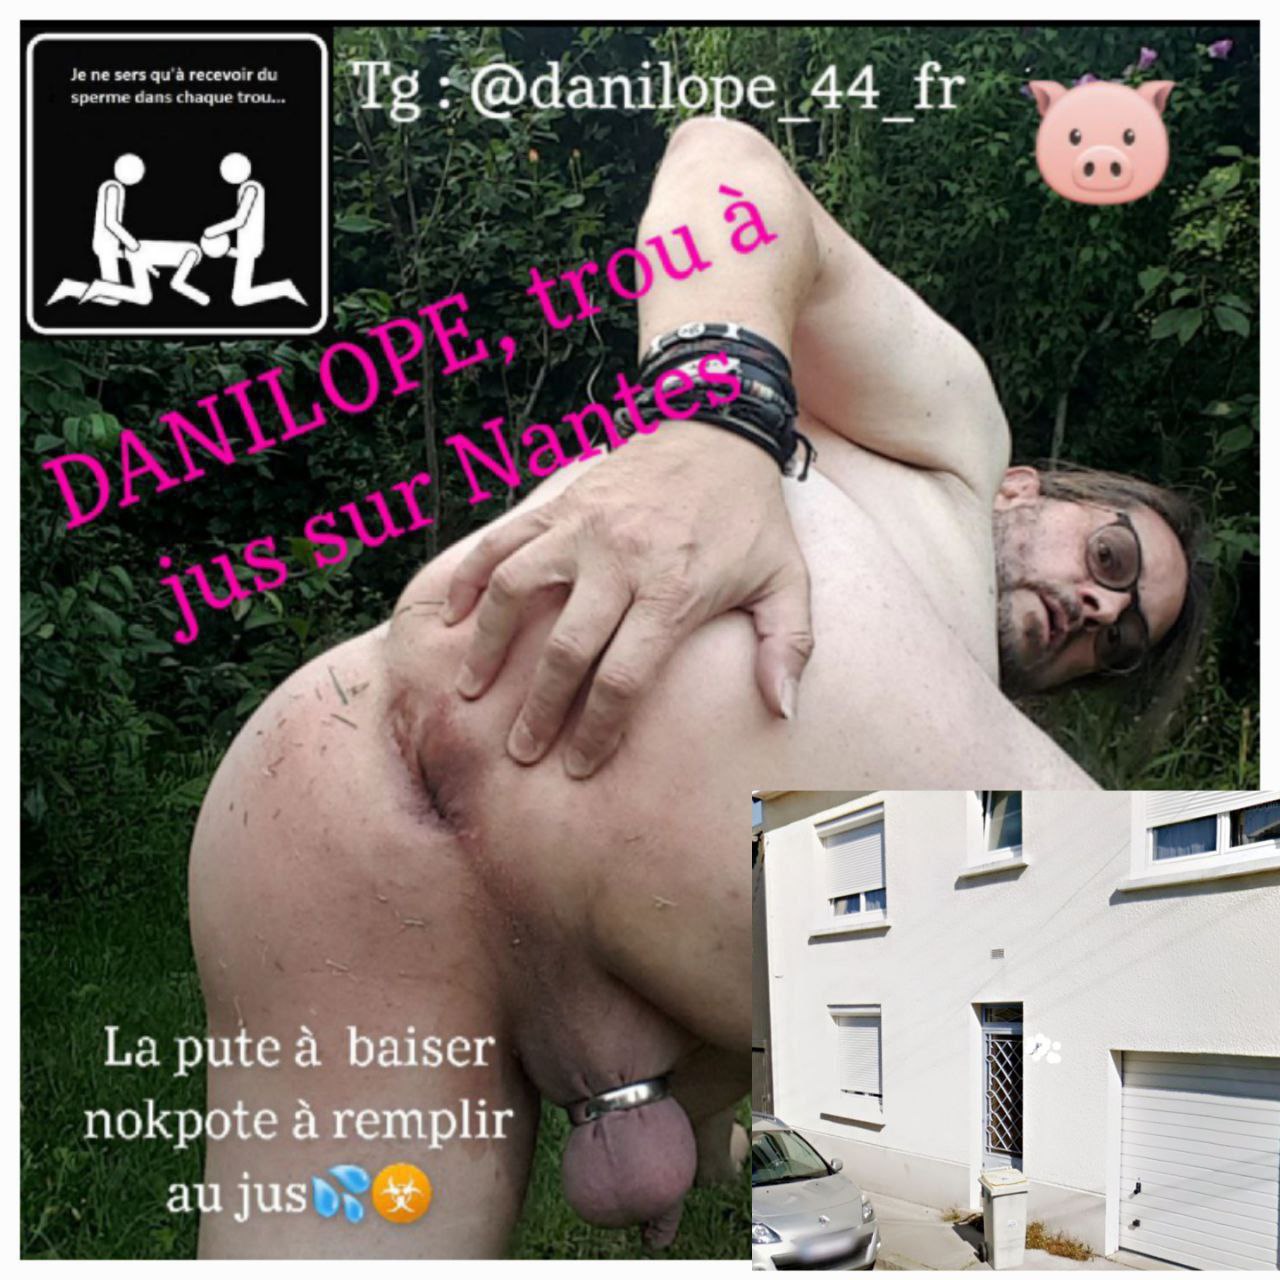 Danilope, la pute de Nantes